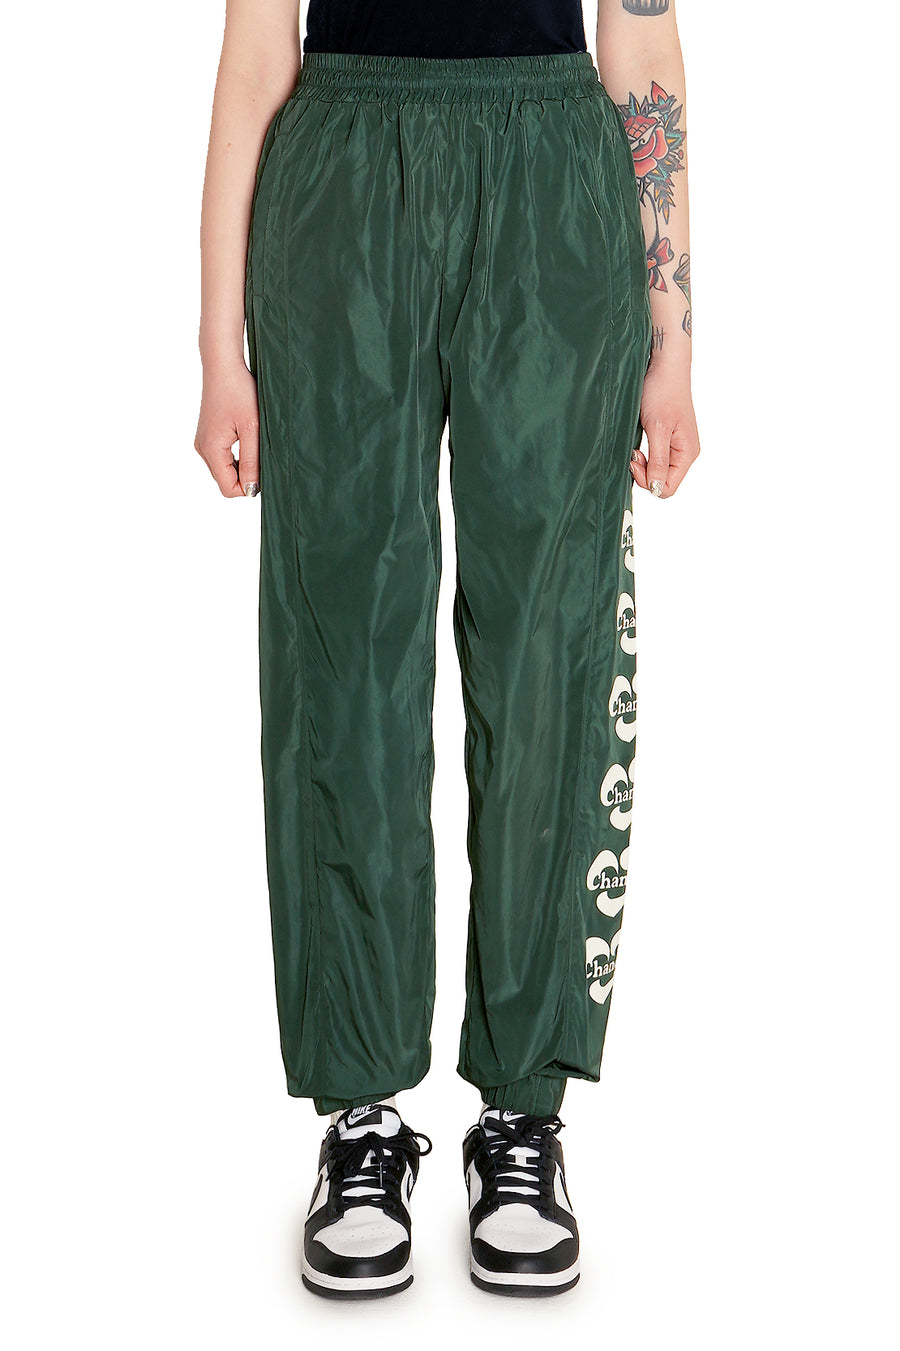 Isadora Silk Blend Green Track Pants | rag & bone